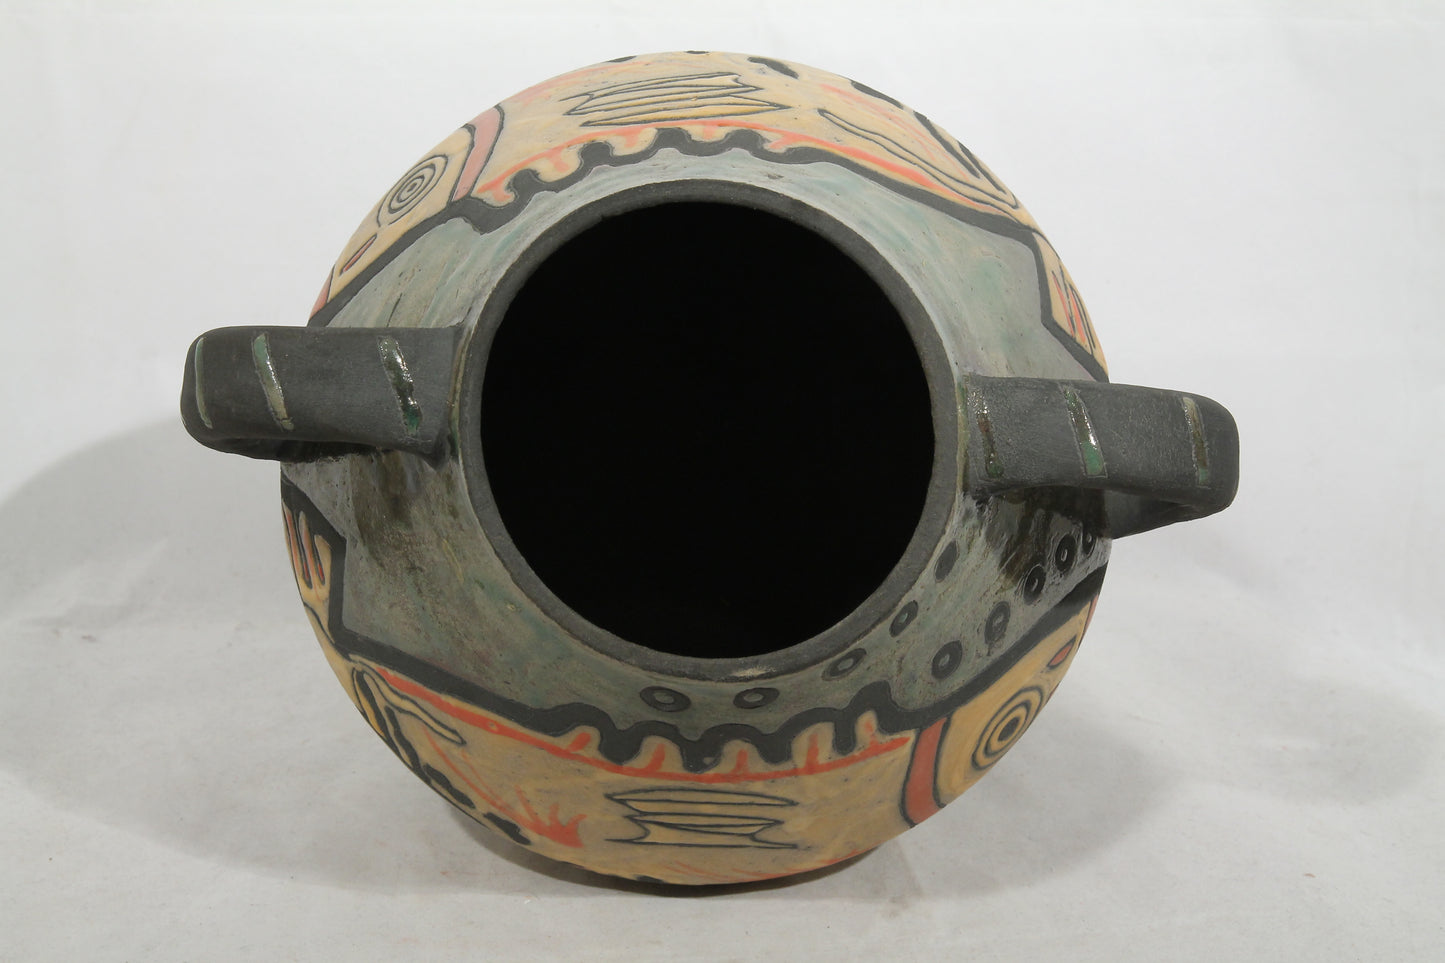 Ceramic/Pottery Vase/Jar Mexican Folk Art Collectible Décor 2 Fish